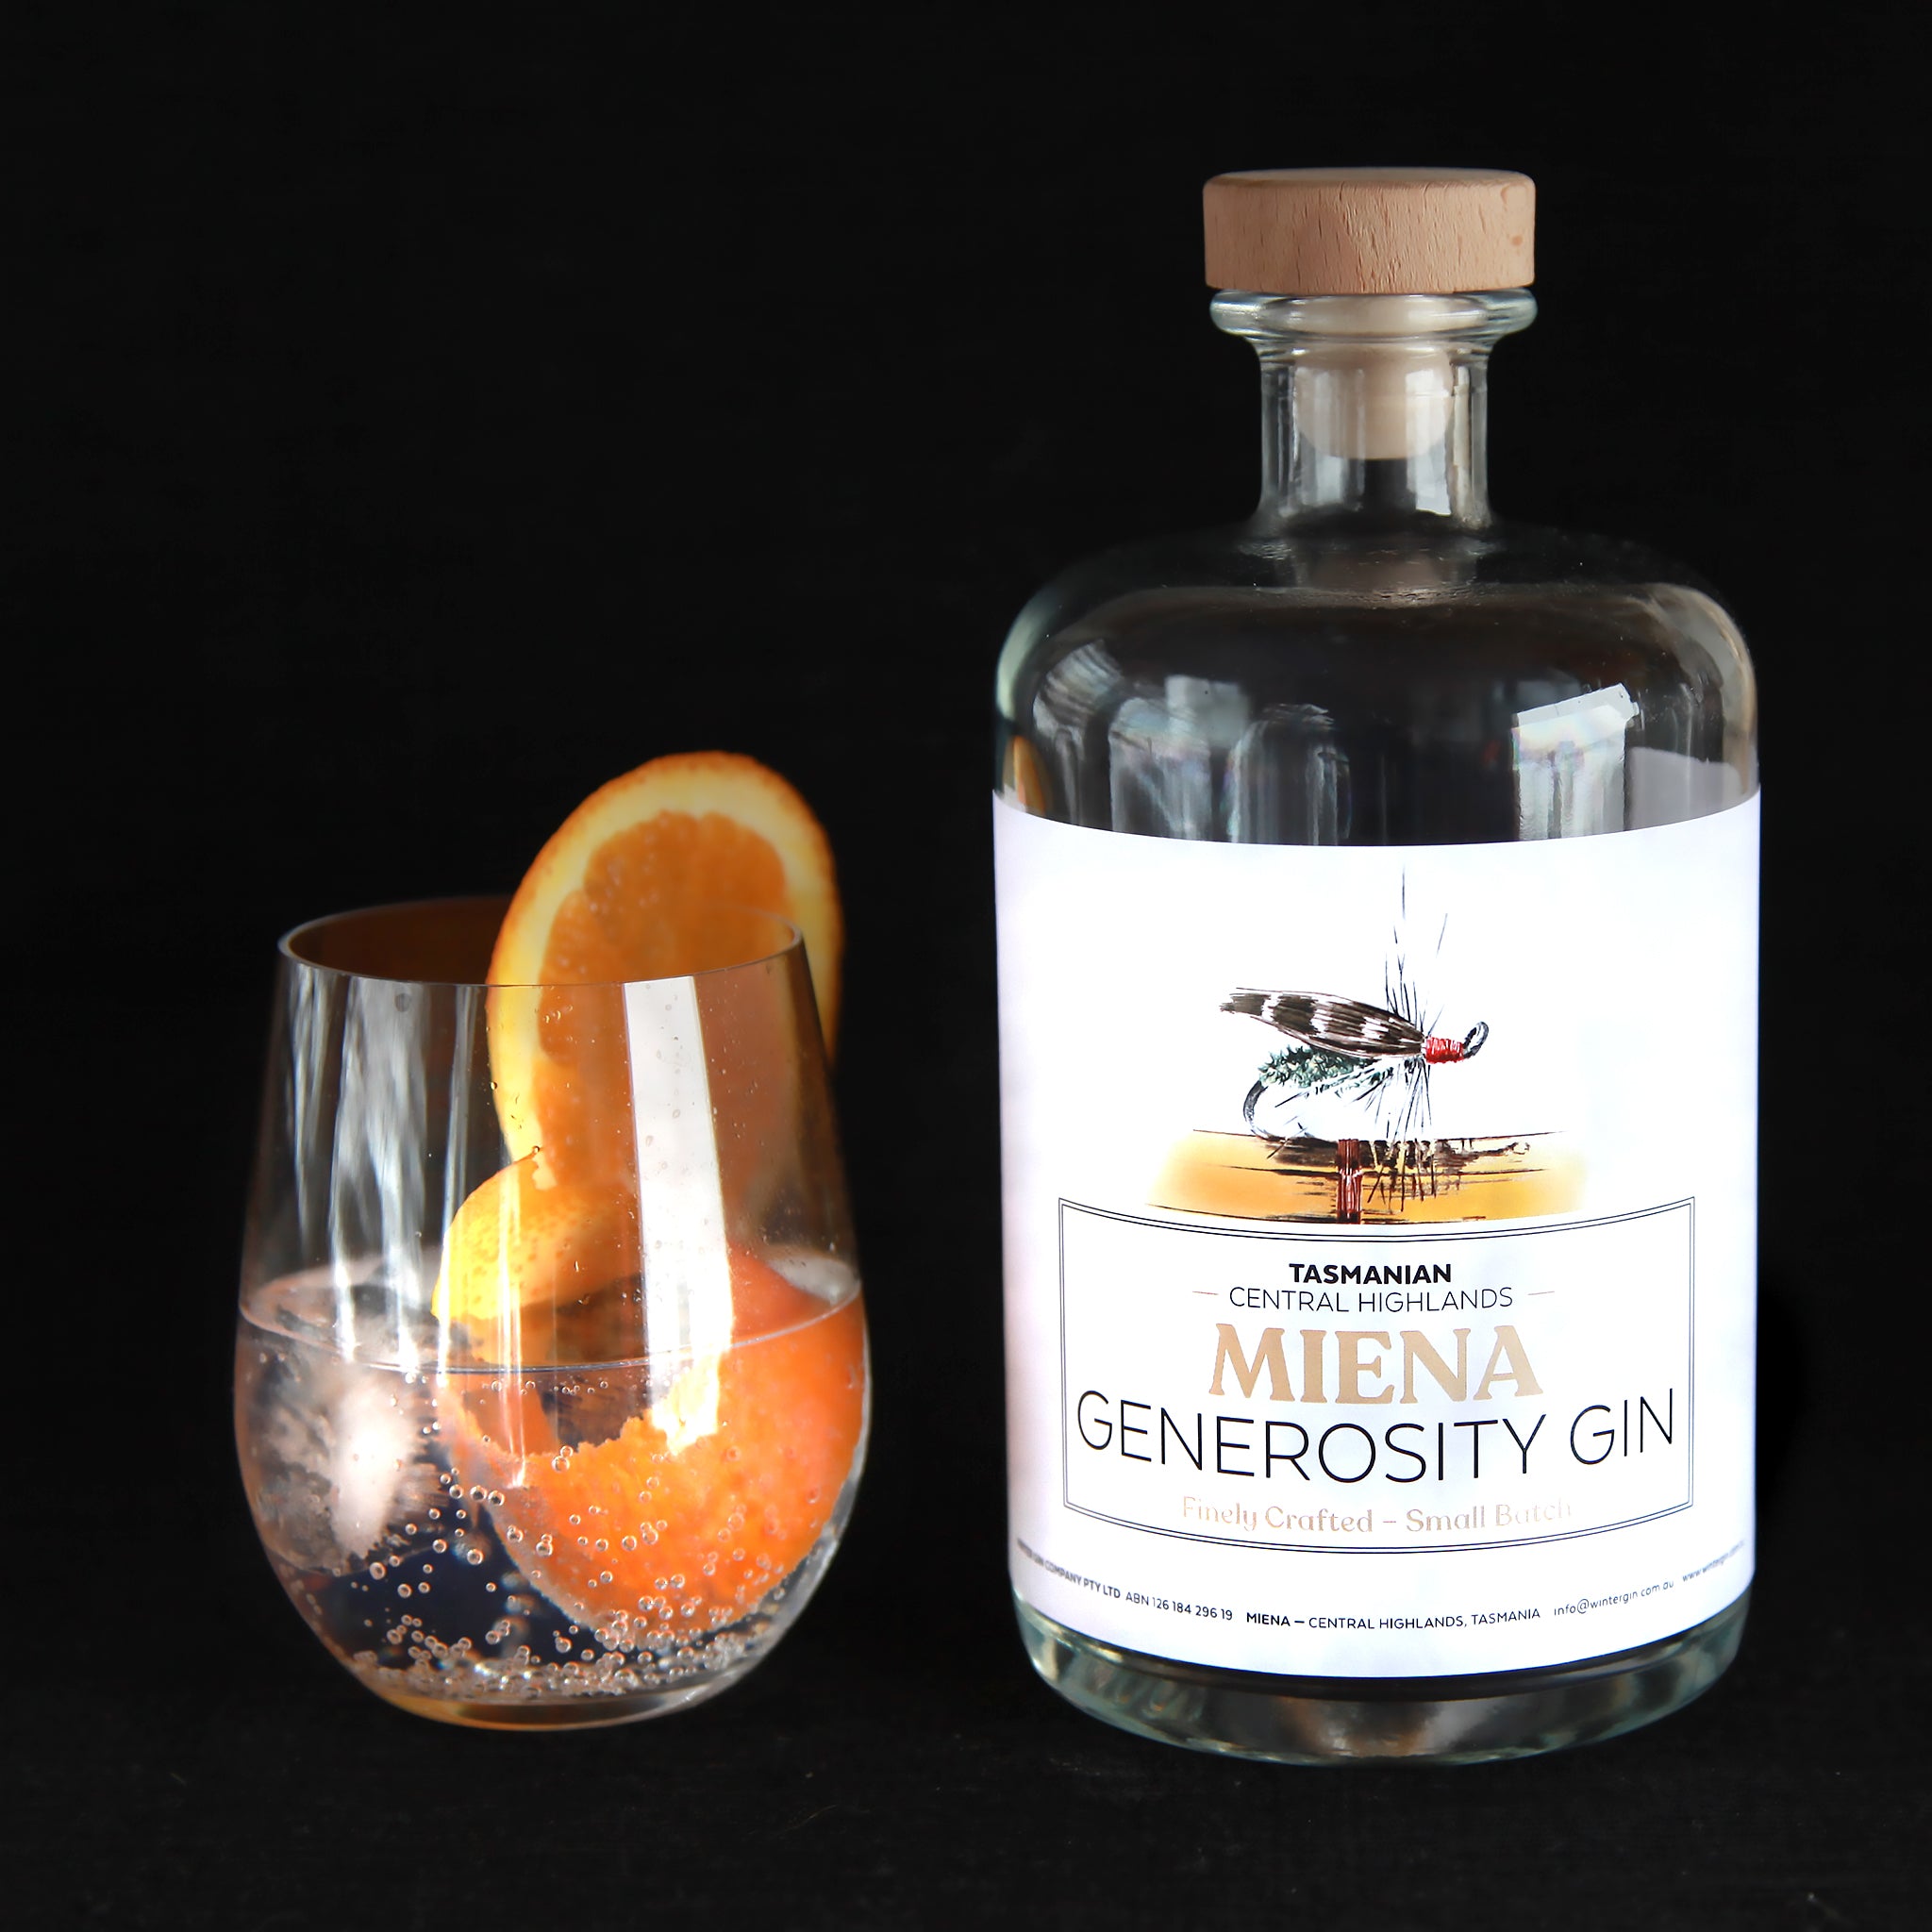 Miena Tasmania Generosity Gin Central Highlands